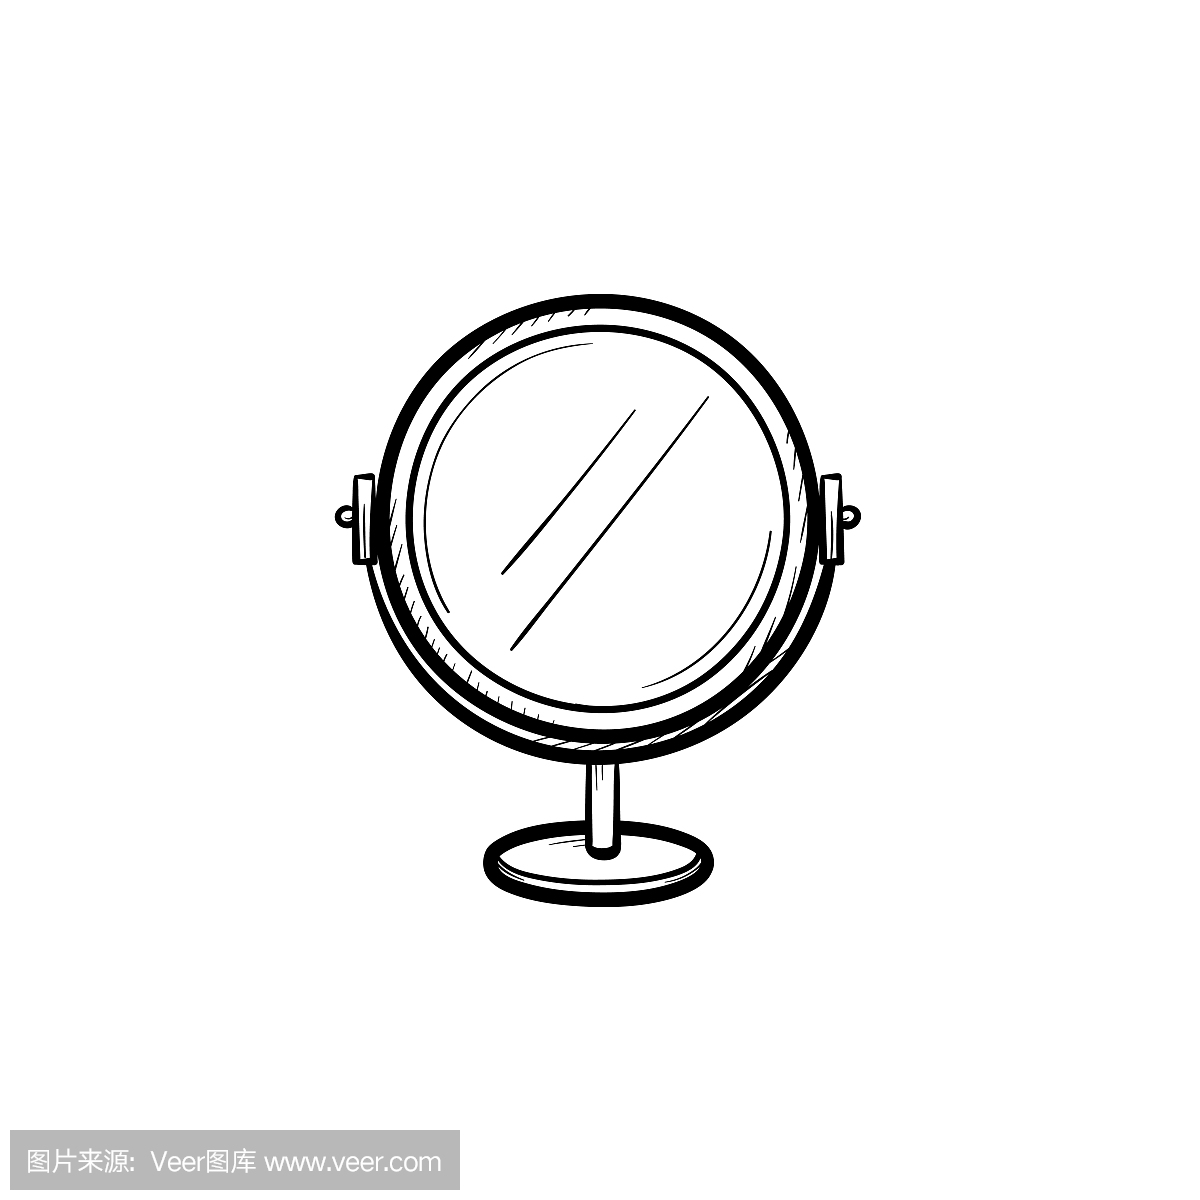 Round makeup mirror hand drawn sketch icon